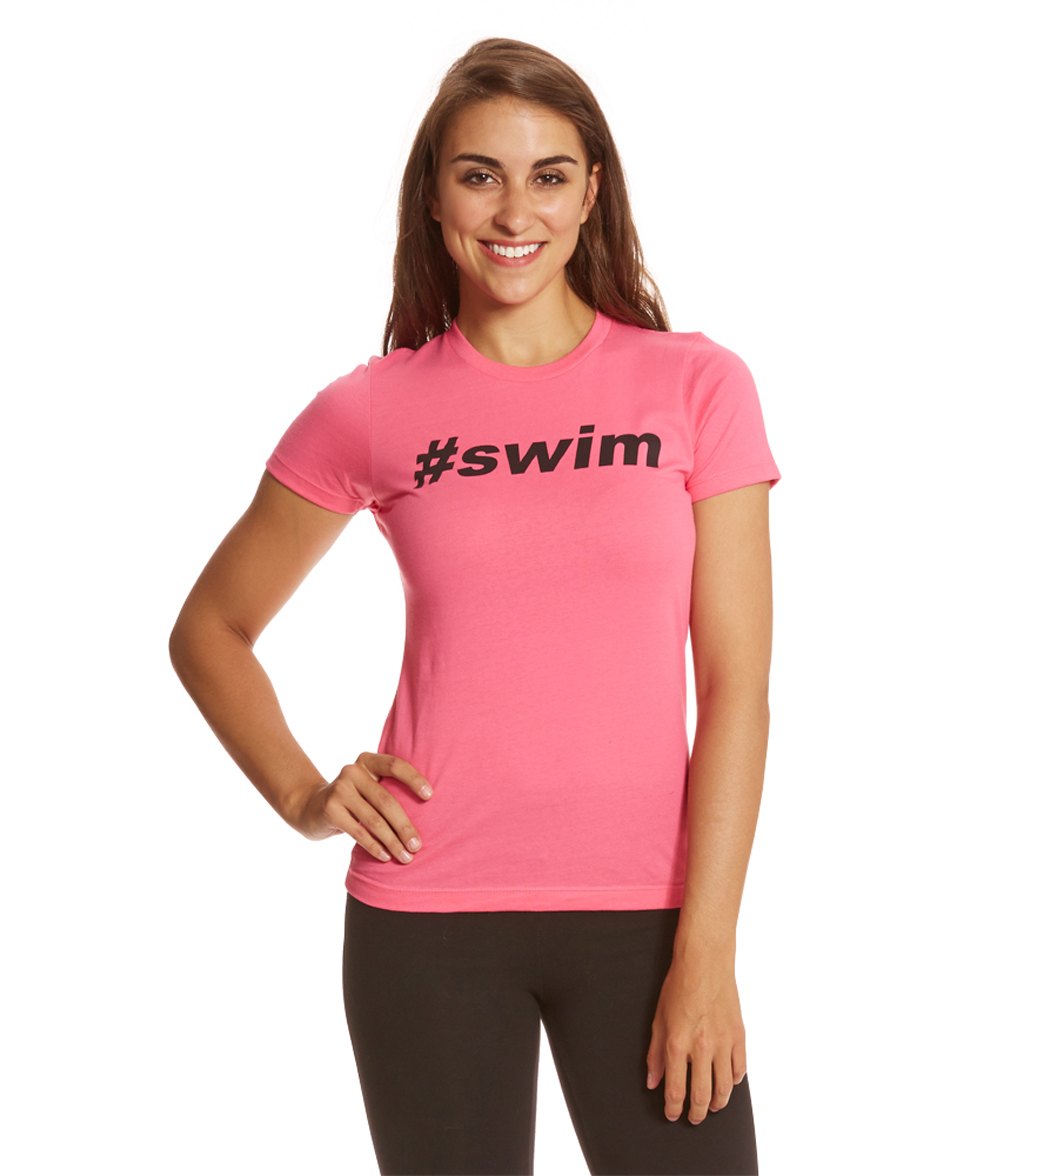 Ambro Manufacturing Women's #swim Tee Shirt - Hot Pink Large Cotton - Swimoutlet.com